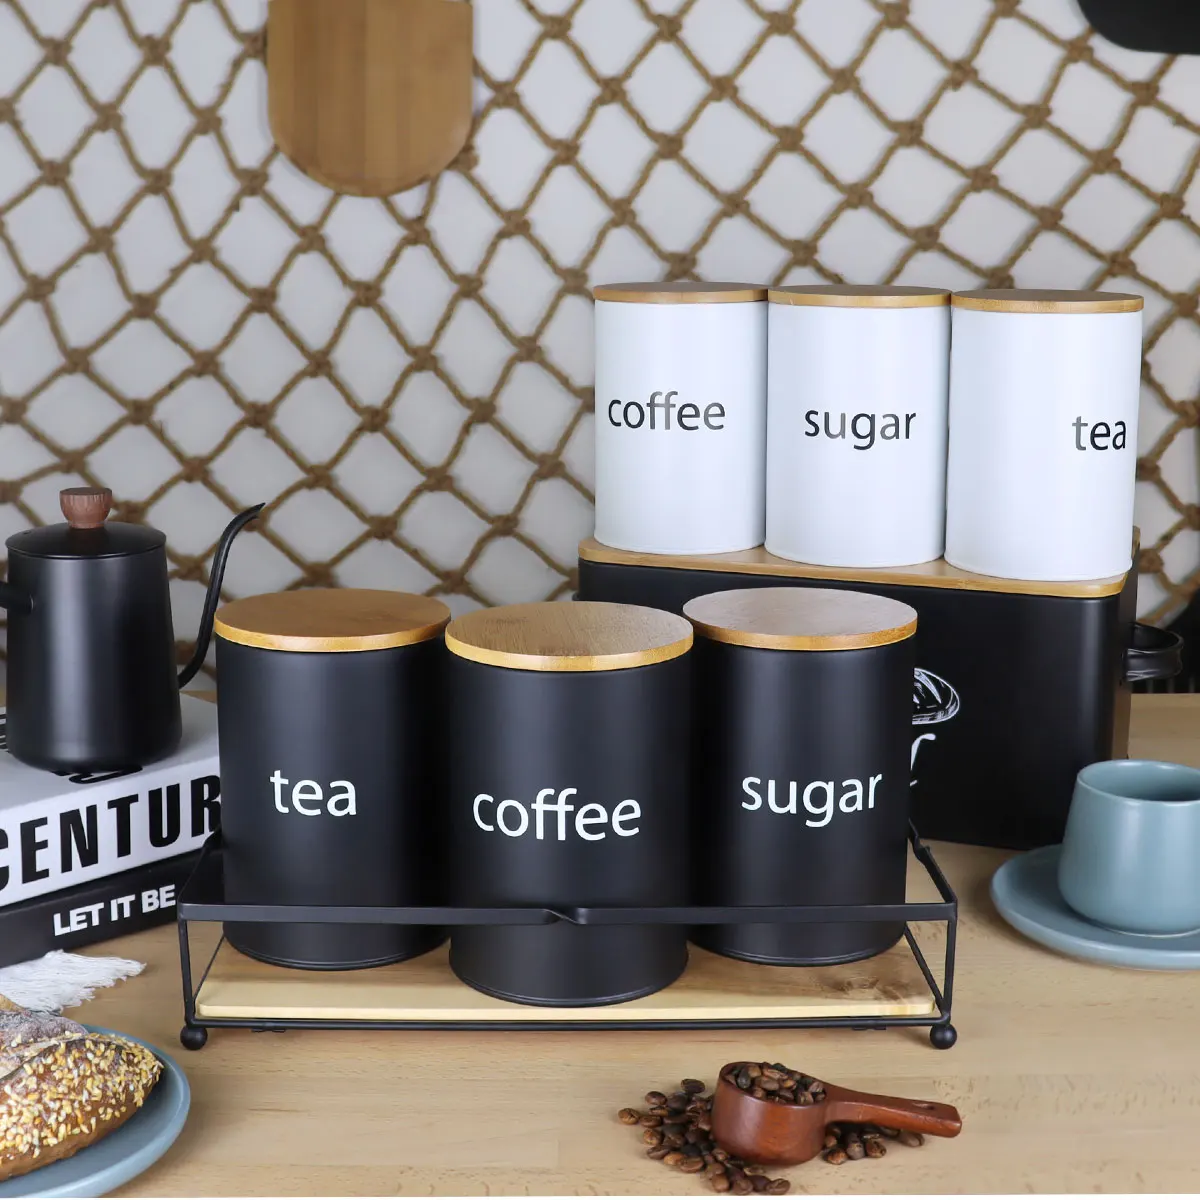 https://ae01.alicdn.com/kf/S35122cf2a36c4f6d9b6eee00af4459758/3pcs-Sugar-Tea-Coffee-Jar-Metal-Kitchen-Storage-Canister-Round-Square-Candy-Biscuit-Loose-Tea-Leaf.jpg